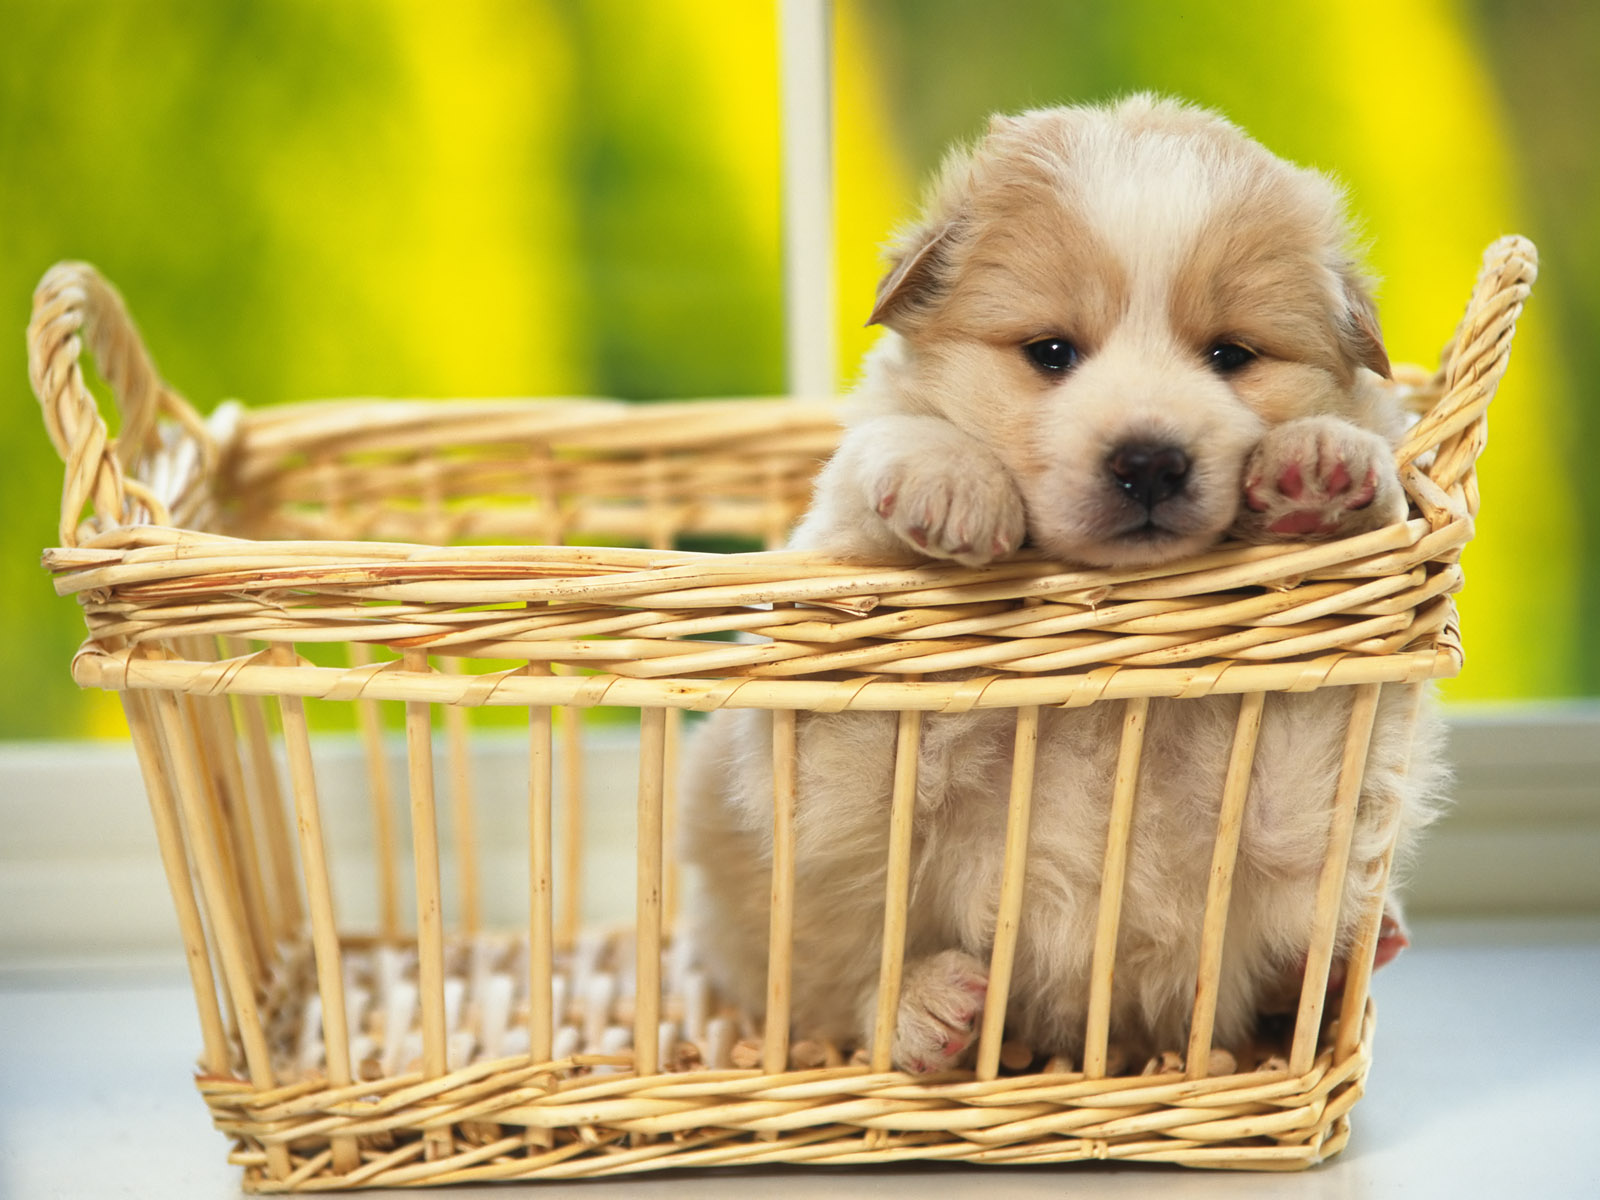 Cute Puppy In A Basket Wallpaper | 1600x1200 | ID:31817 ...